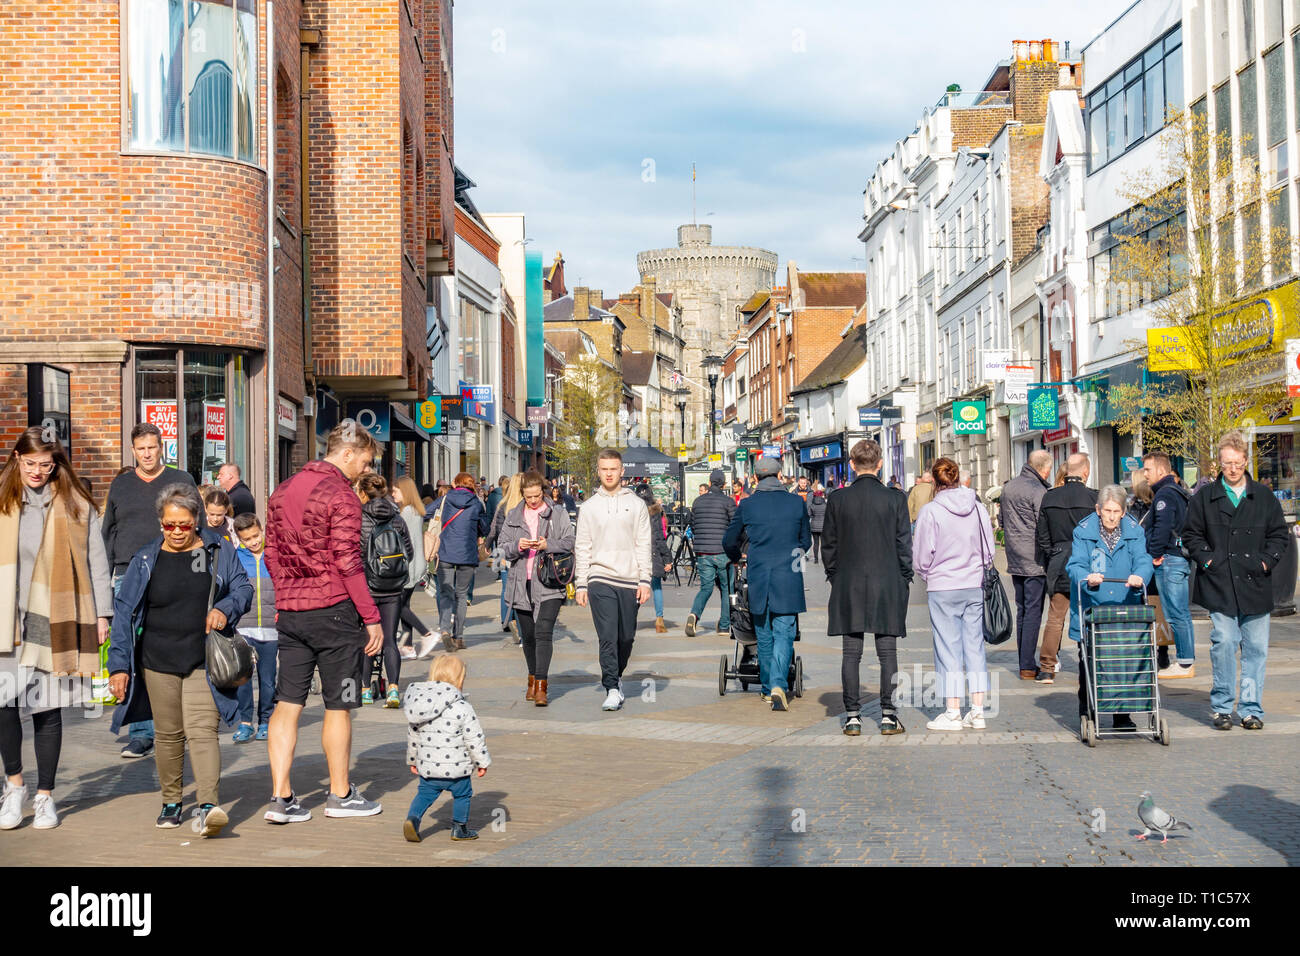 People in Peascod Street, Windsor, UK Stock Photo